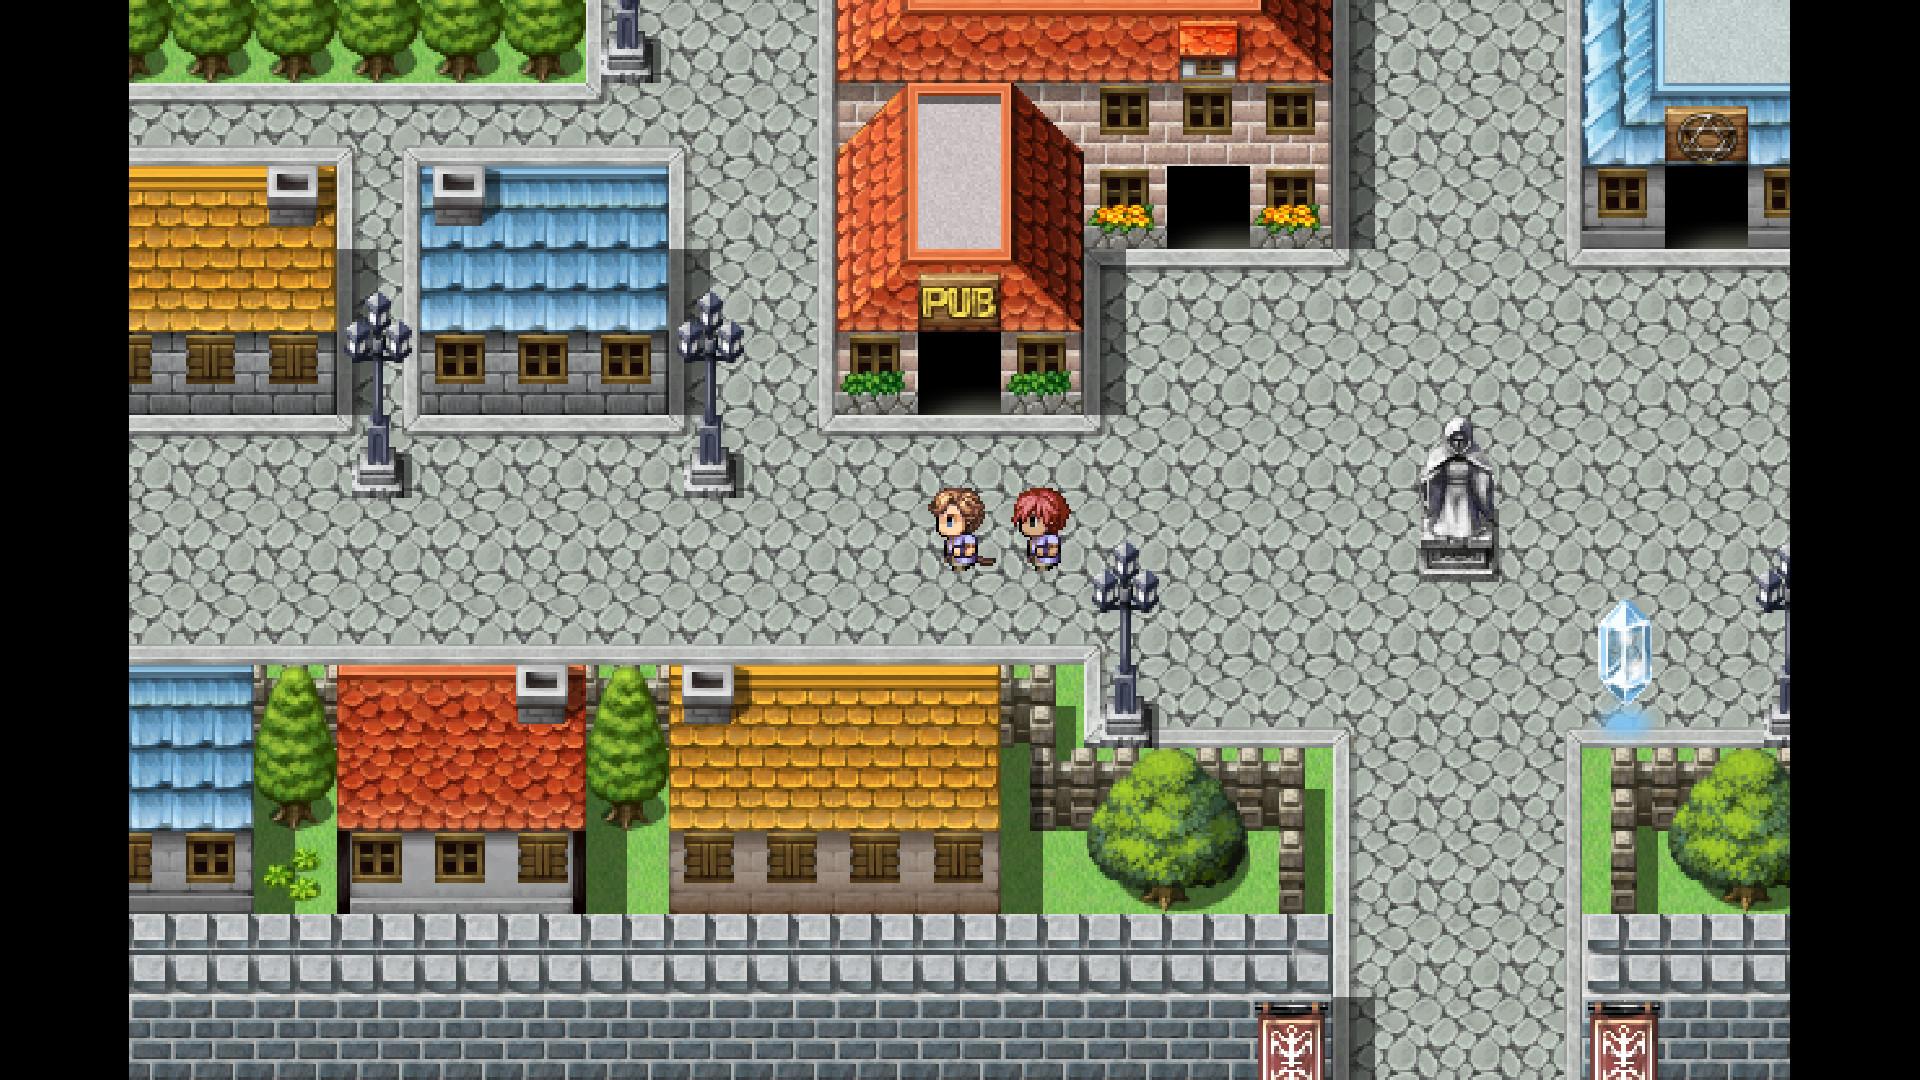 Screenshot №2 from game Drayt Empire